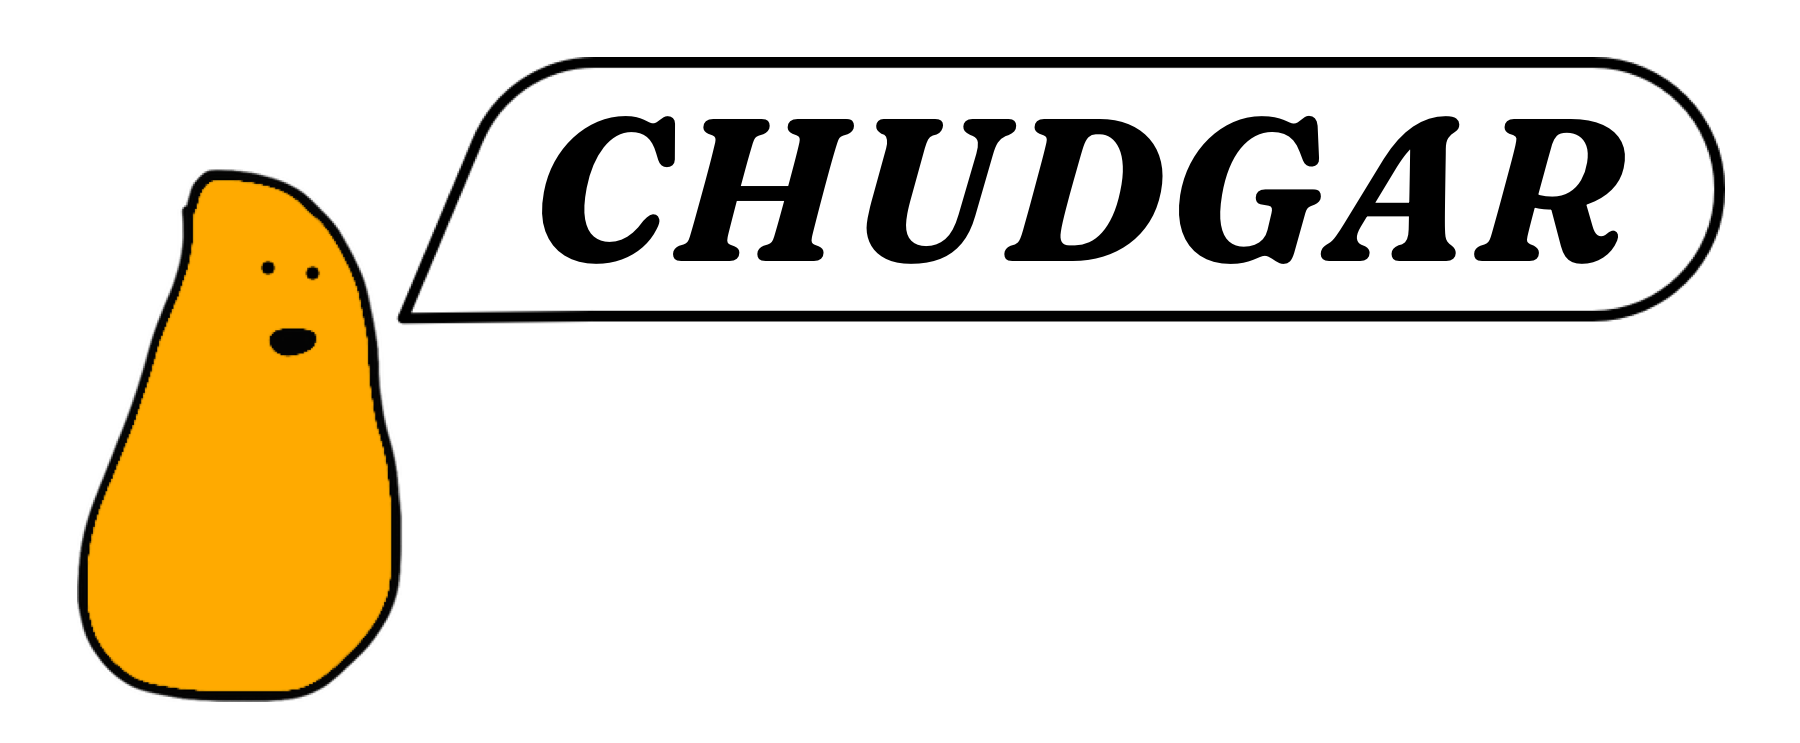 Chudgar Consulting